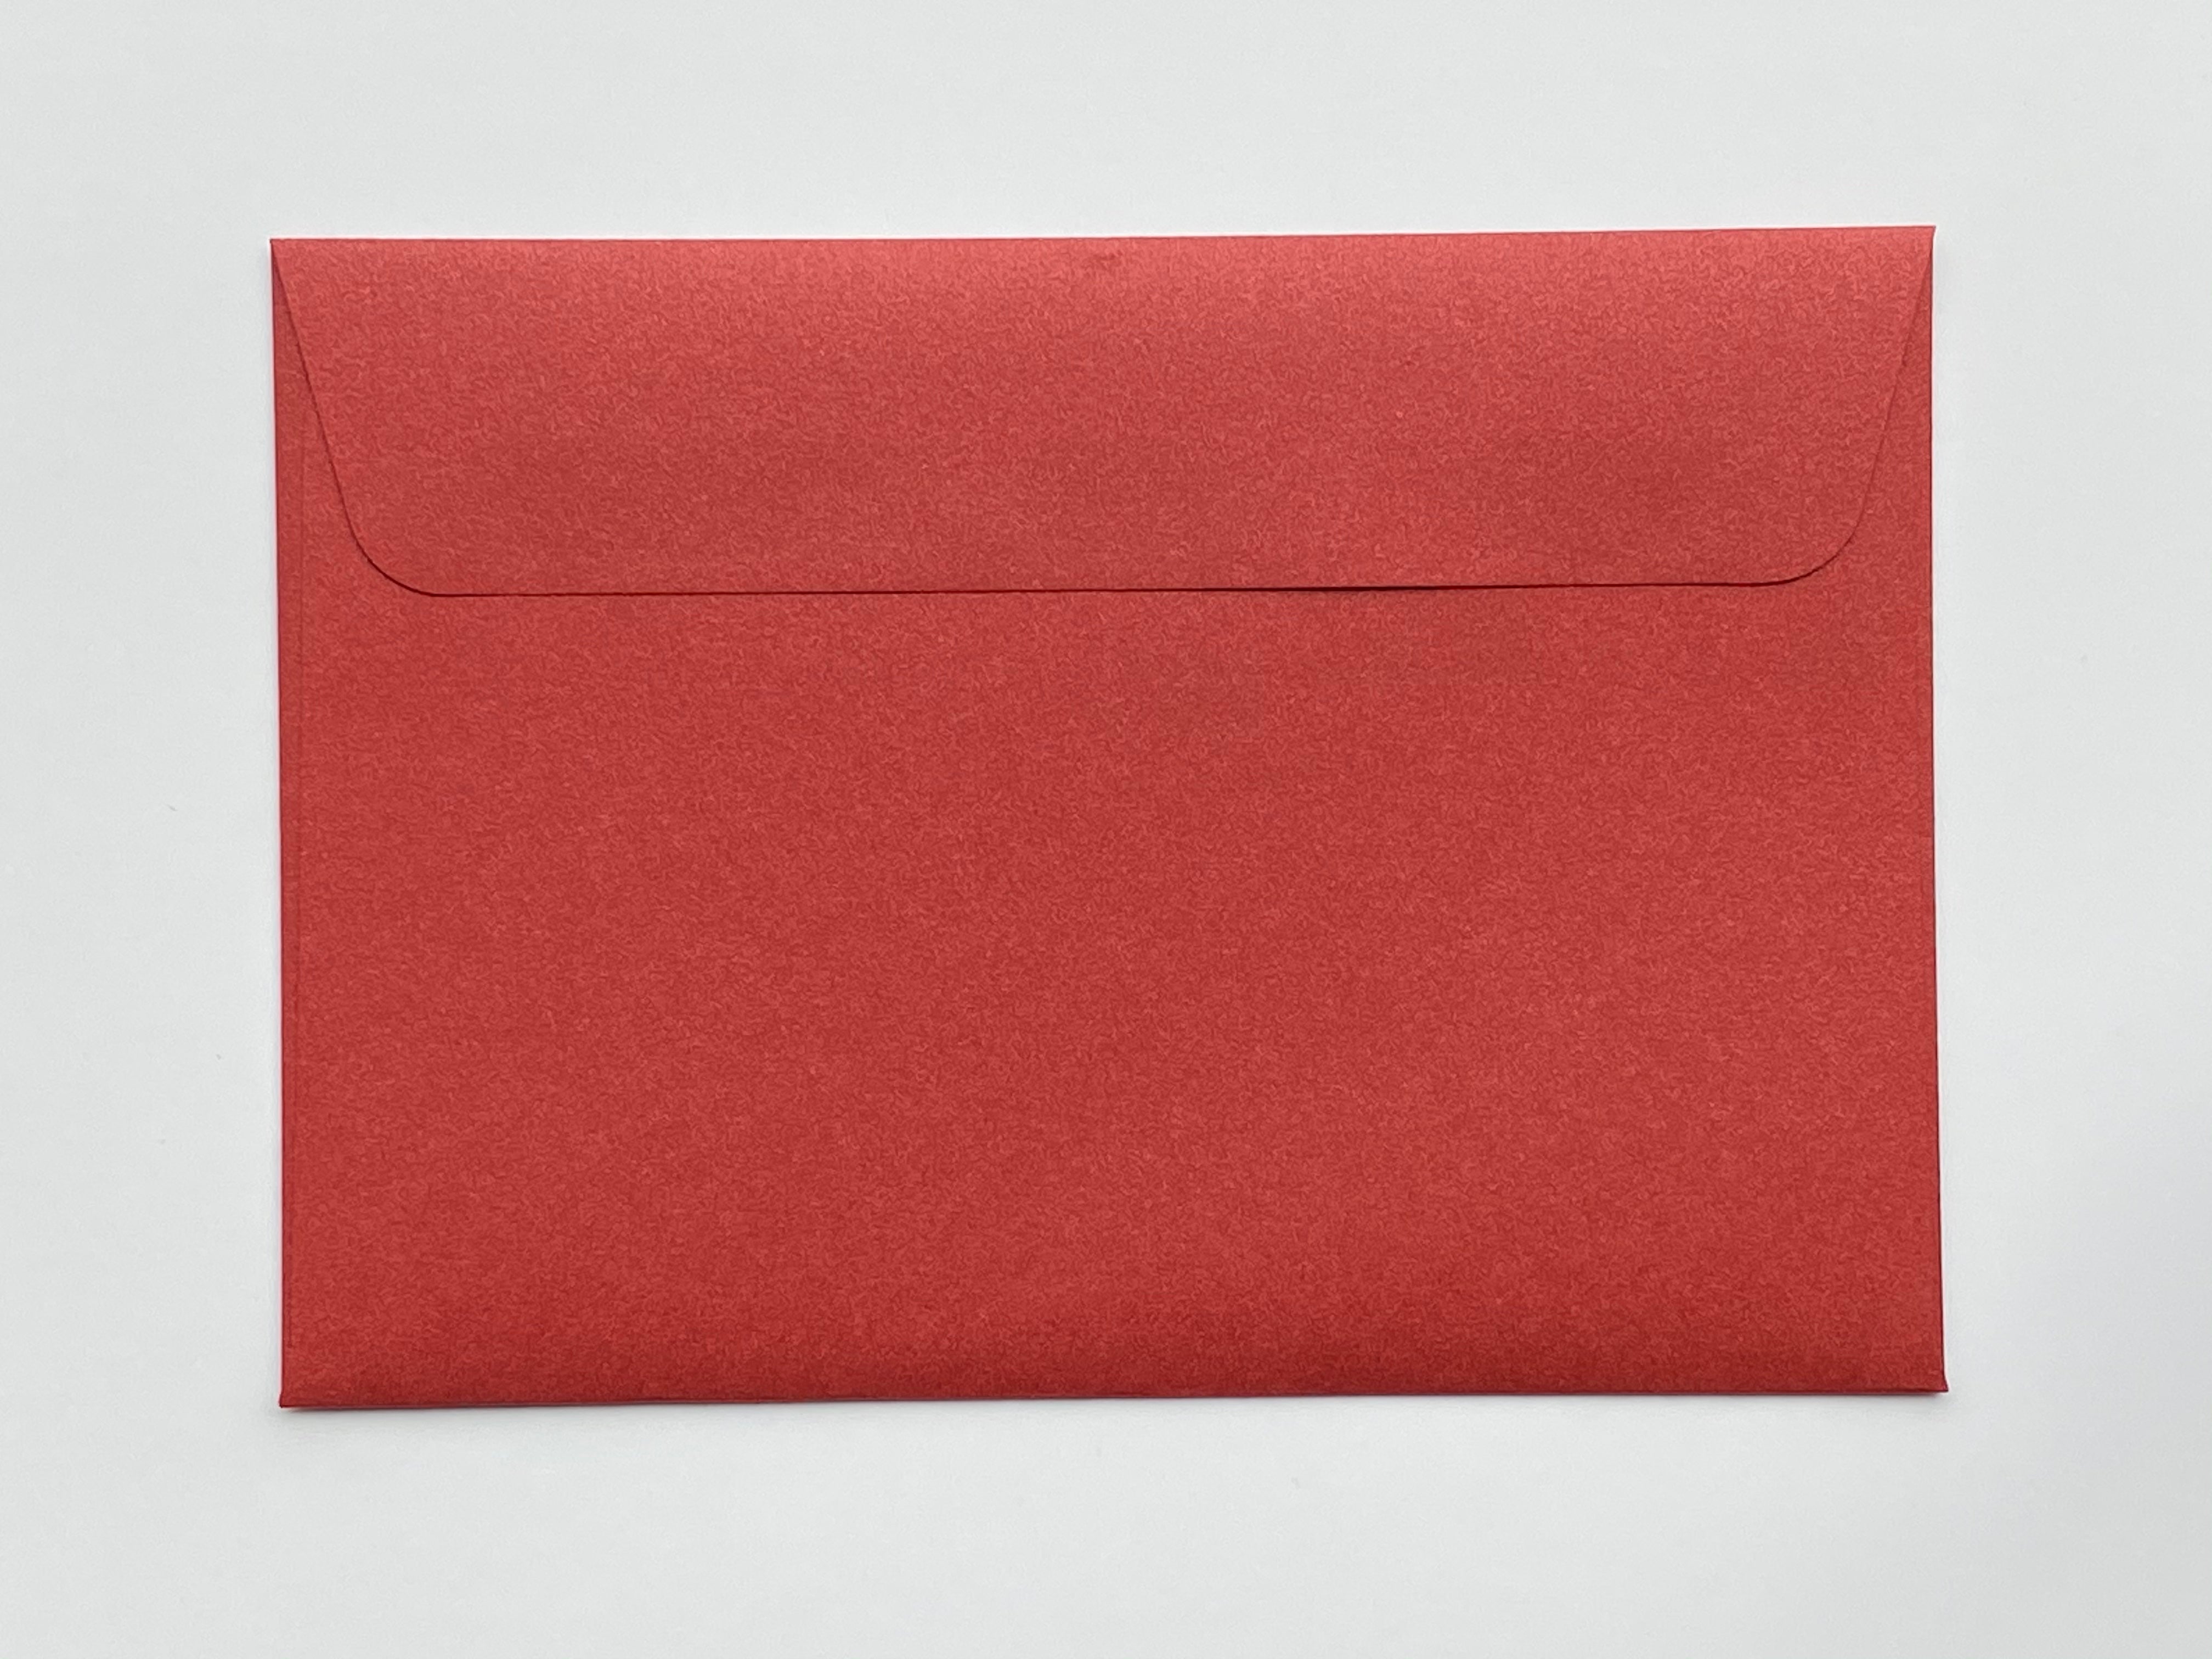 100x140mm metallic envelopes